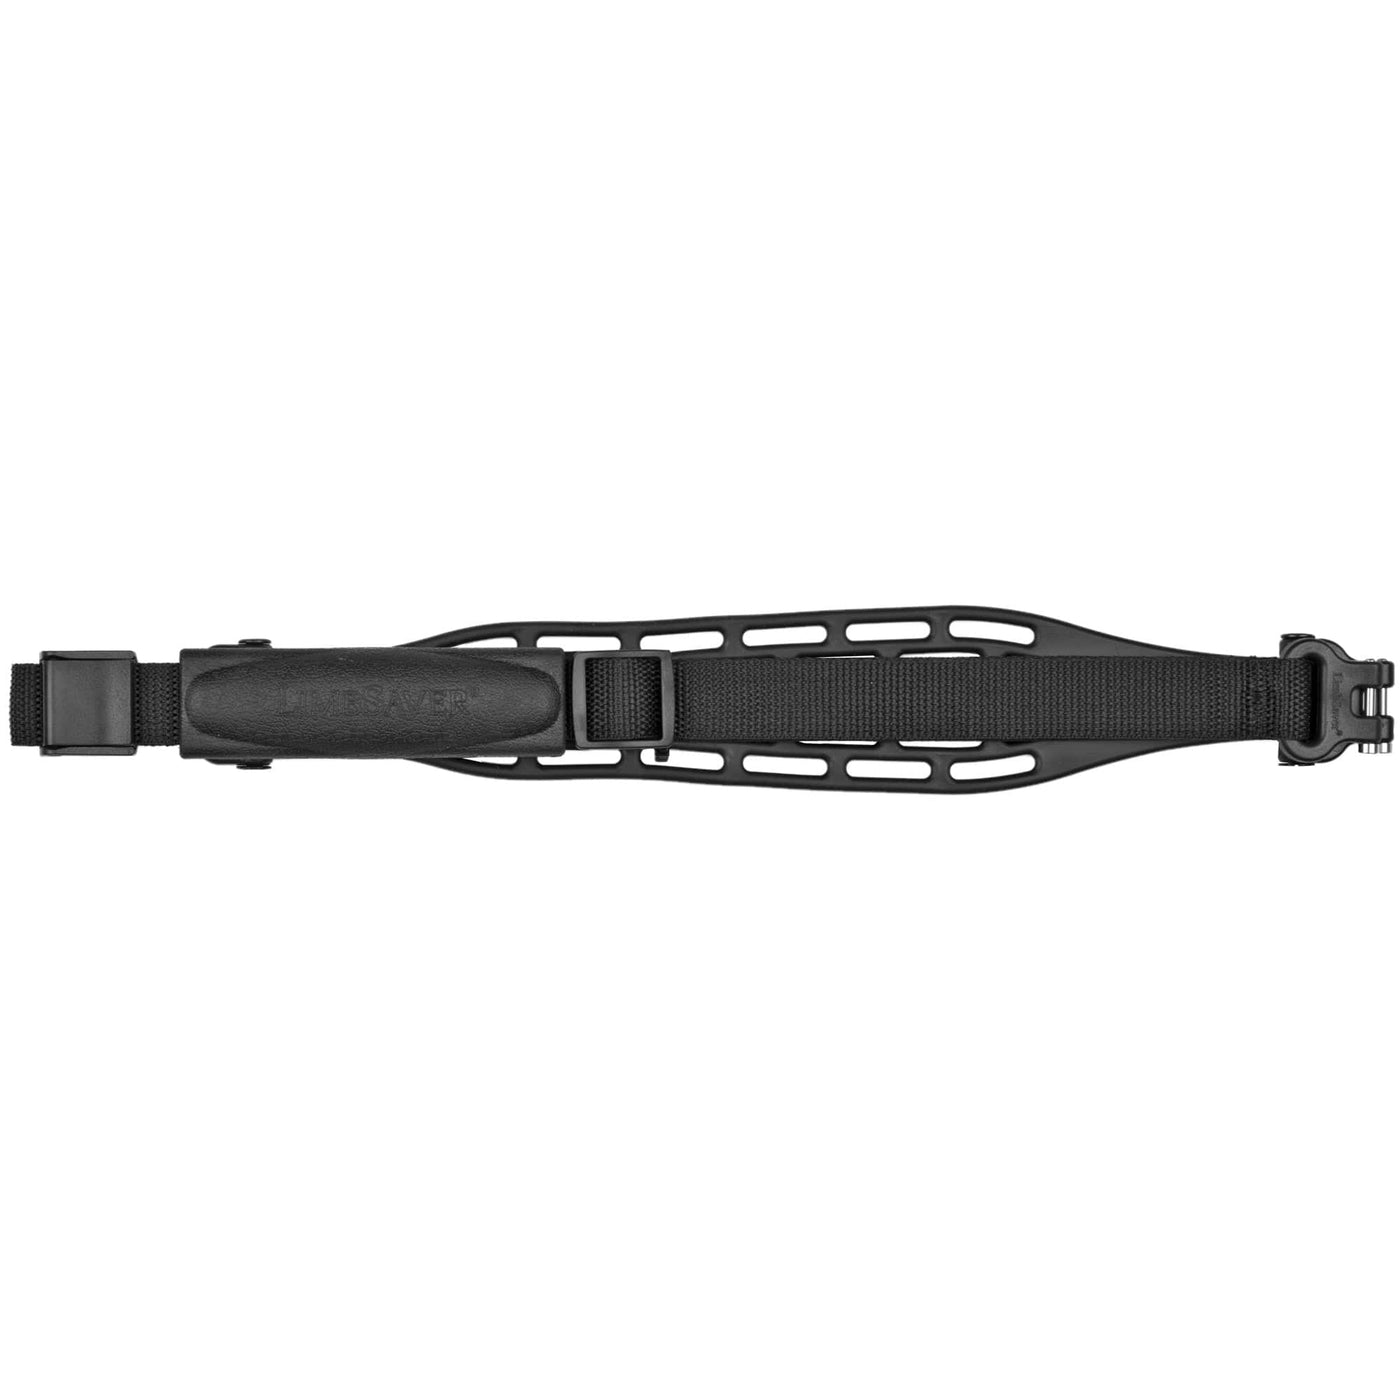 Limbsaver Limbsaver Kodiak-air Rifle Sling Black W/ Swivels Black Shooting Gear and Acc